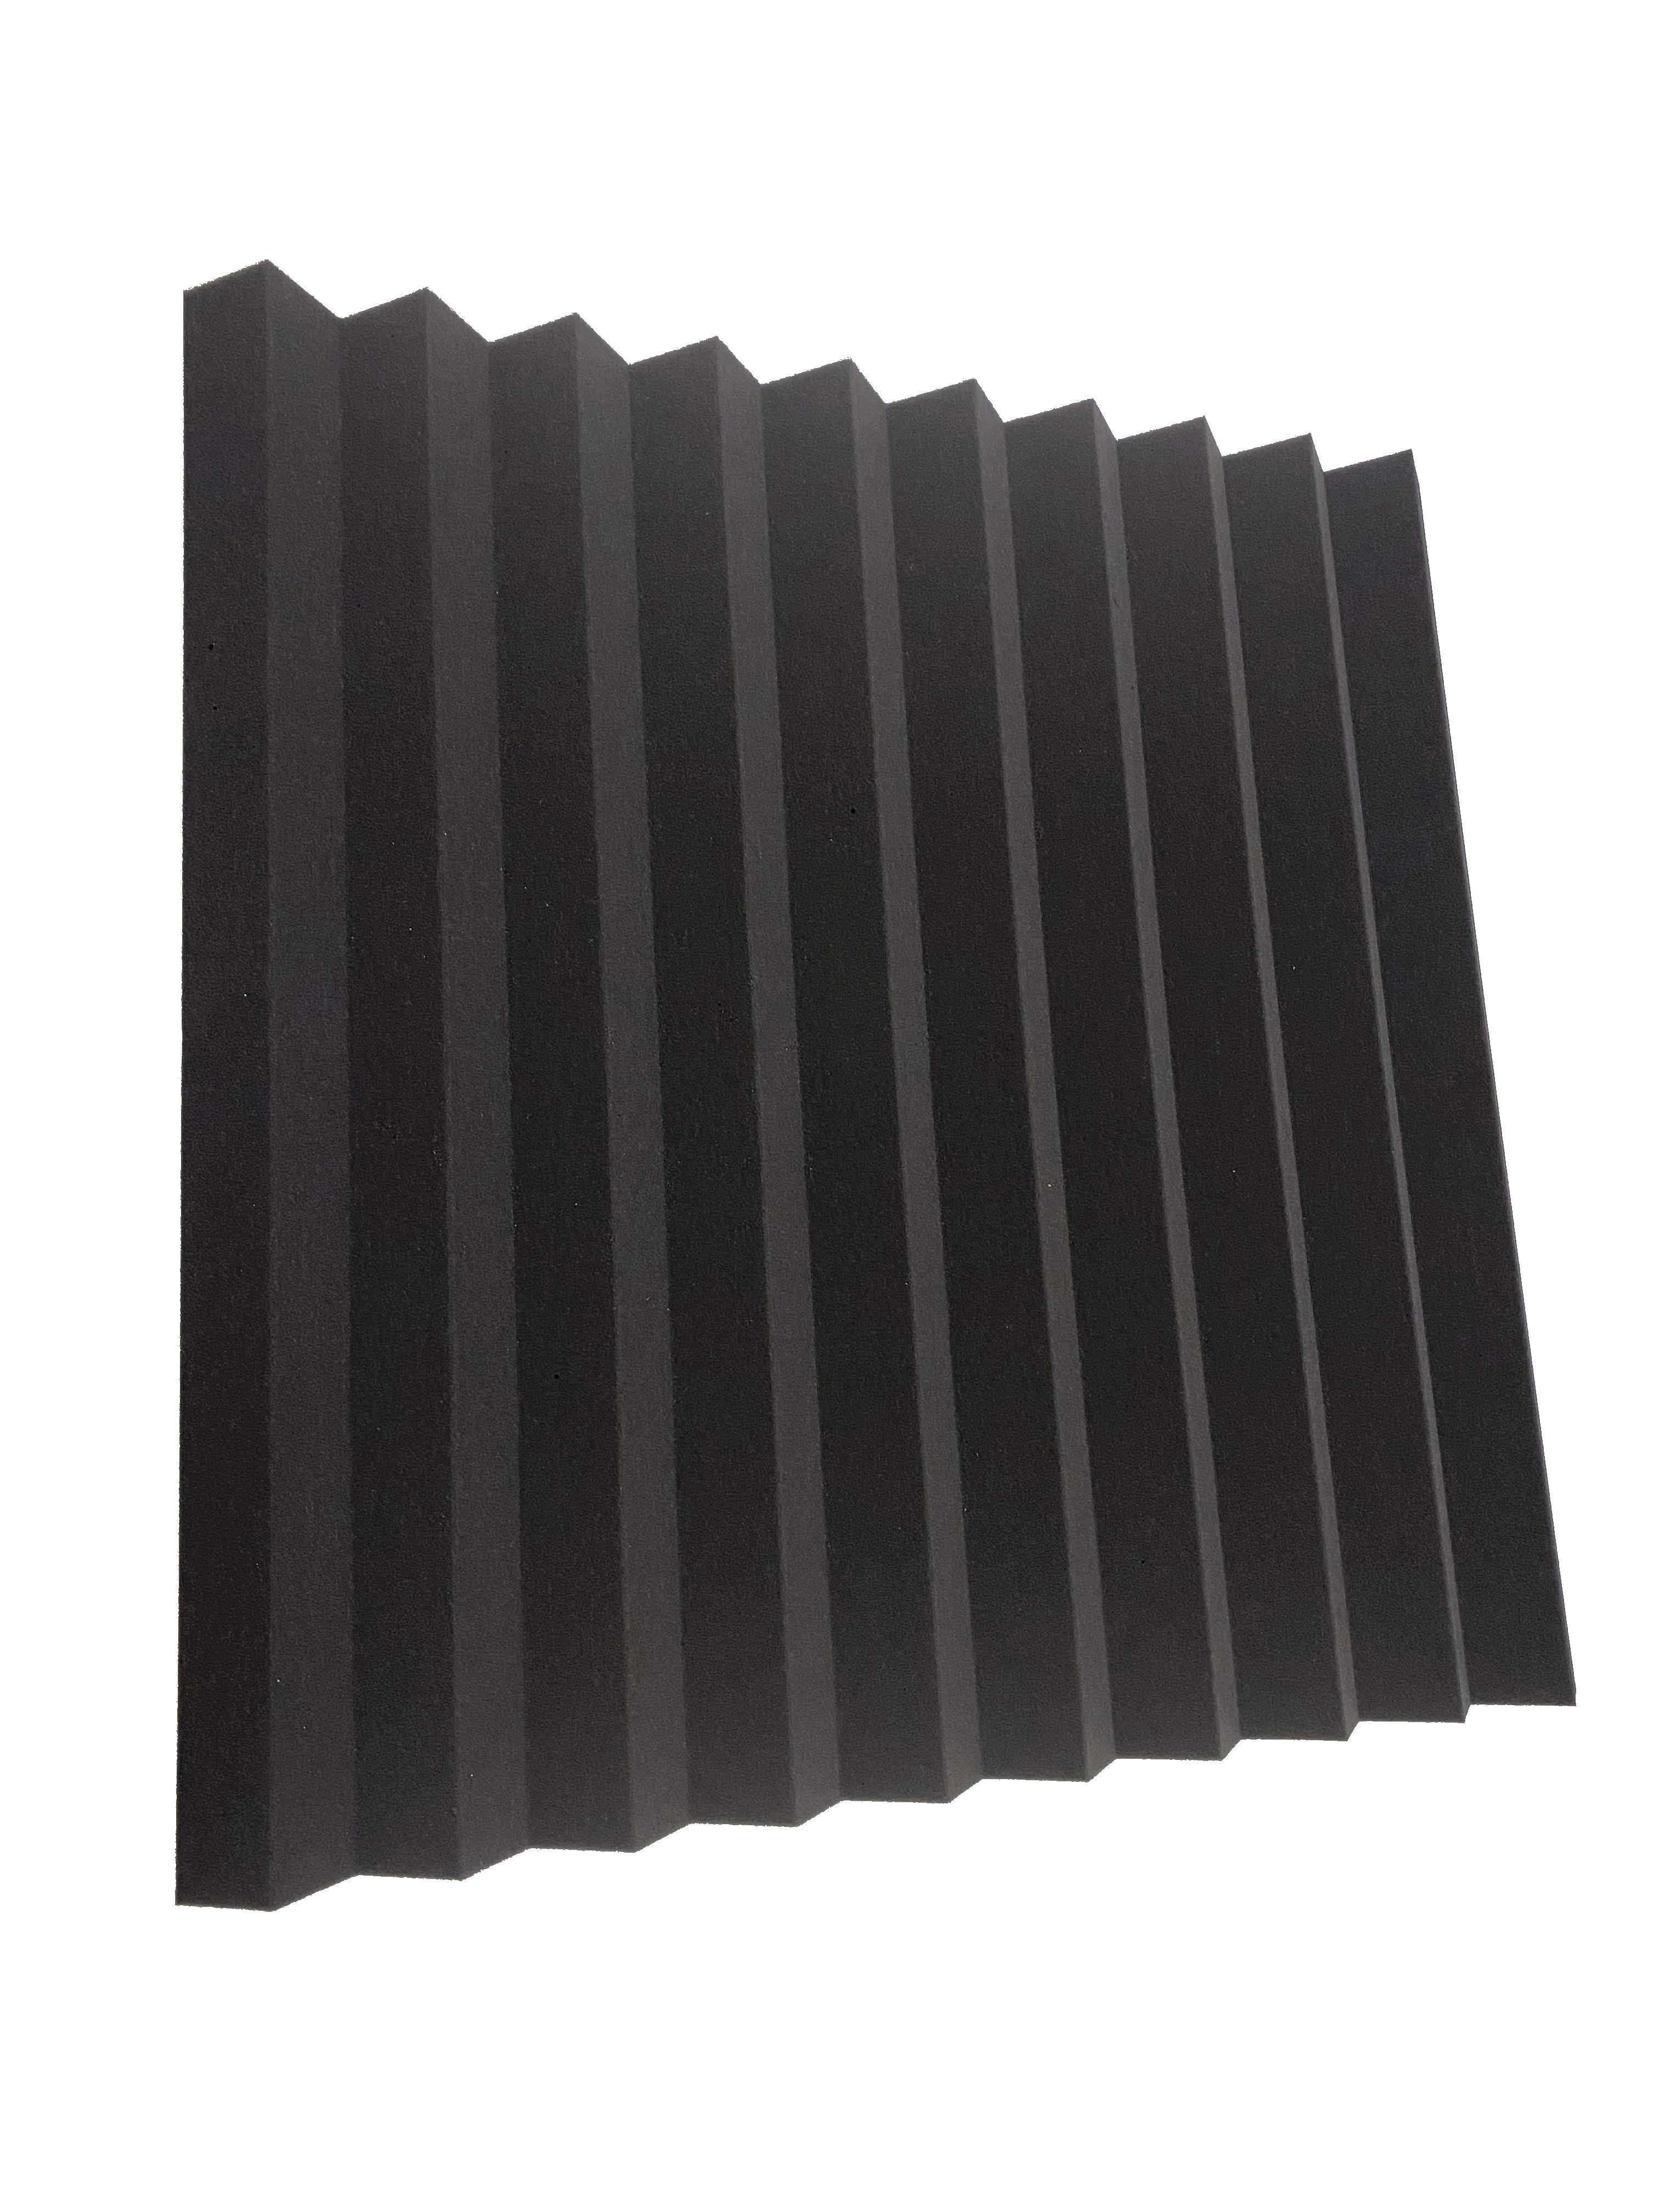 Buy dark-grey Wedge PRO 30&quot; Acoustic Studio Foam Tile Pack